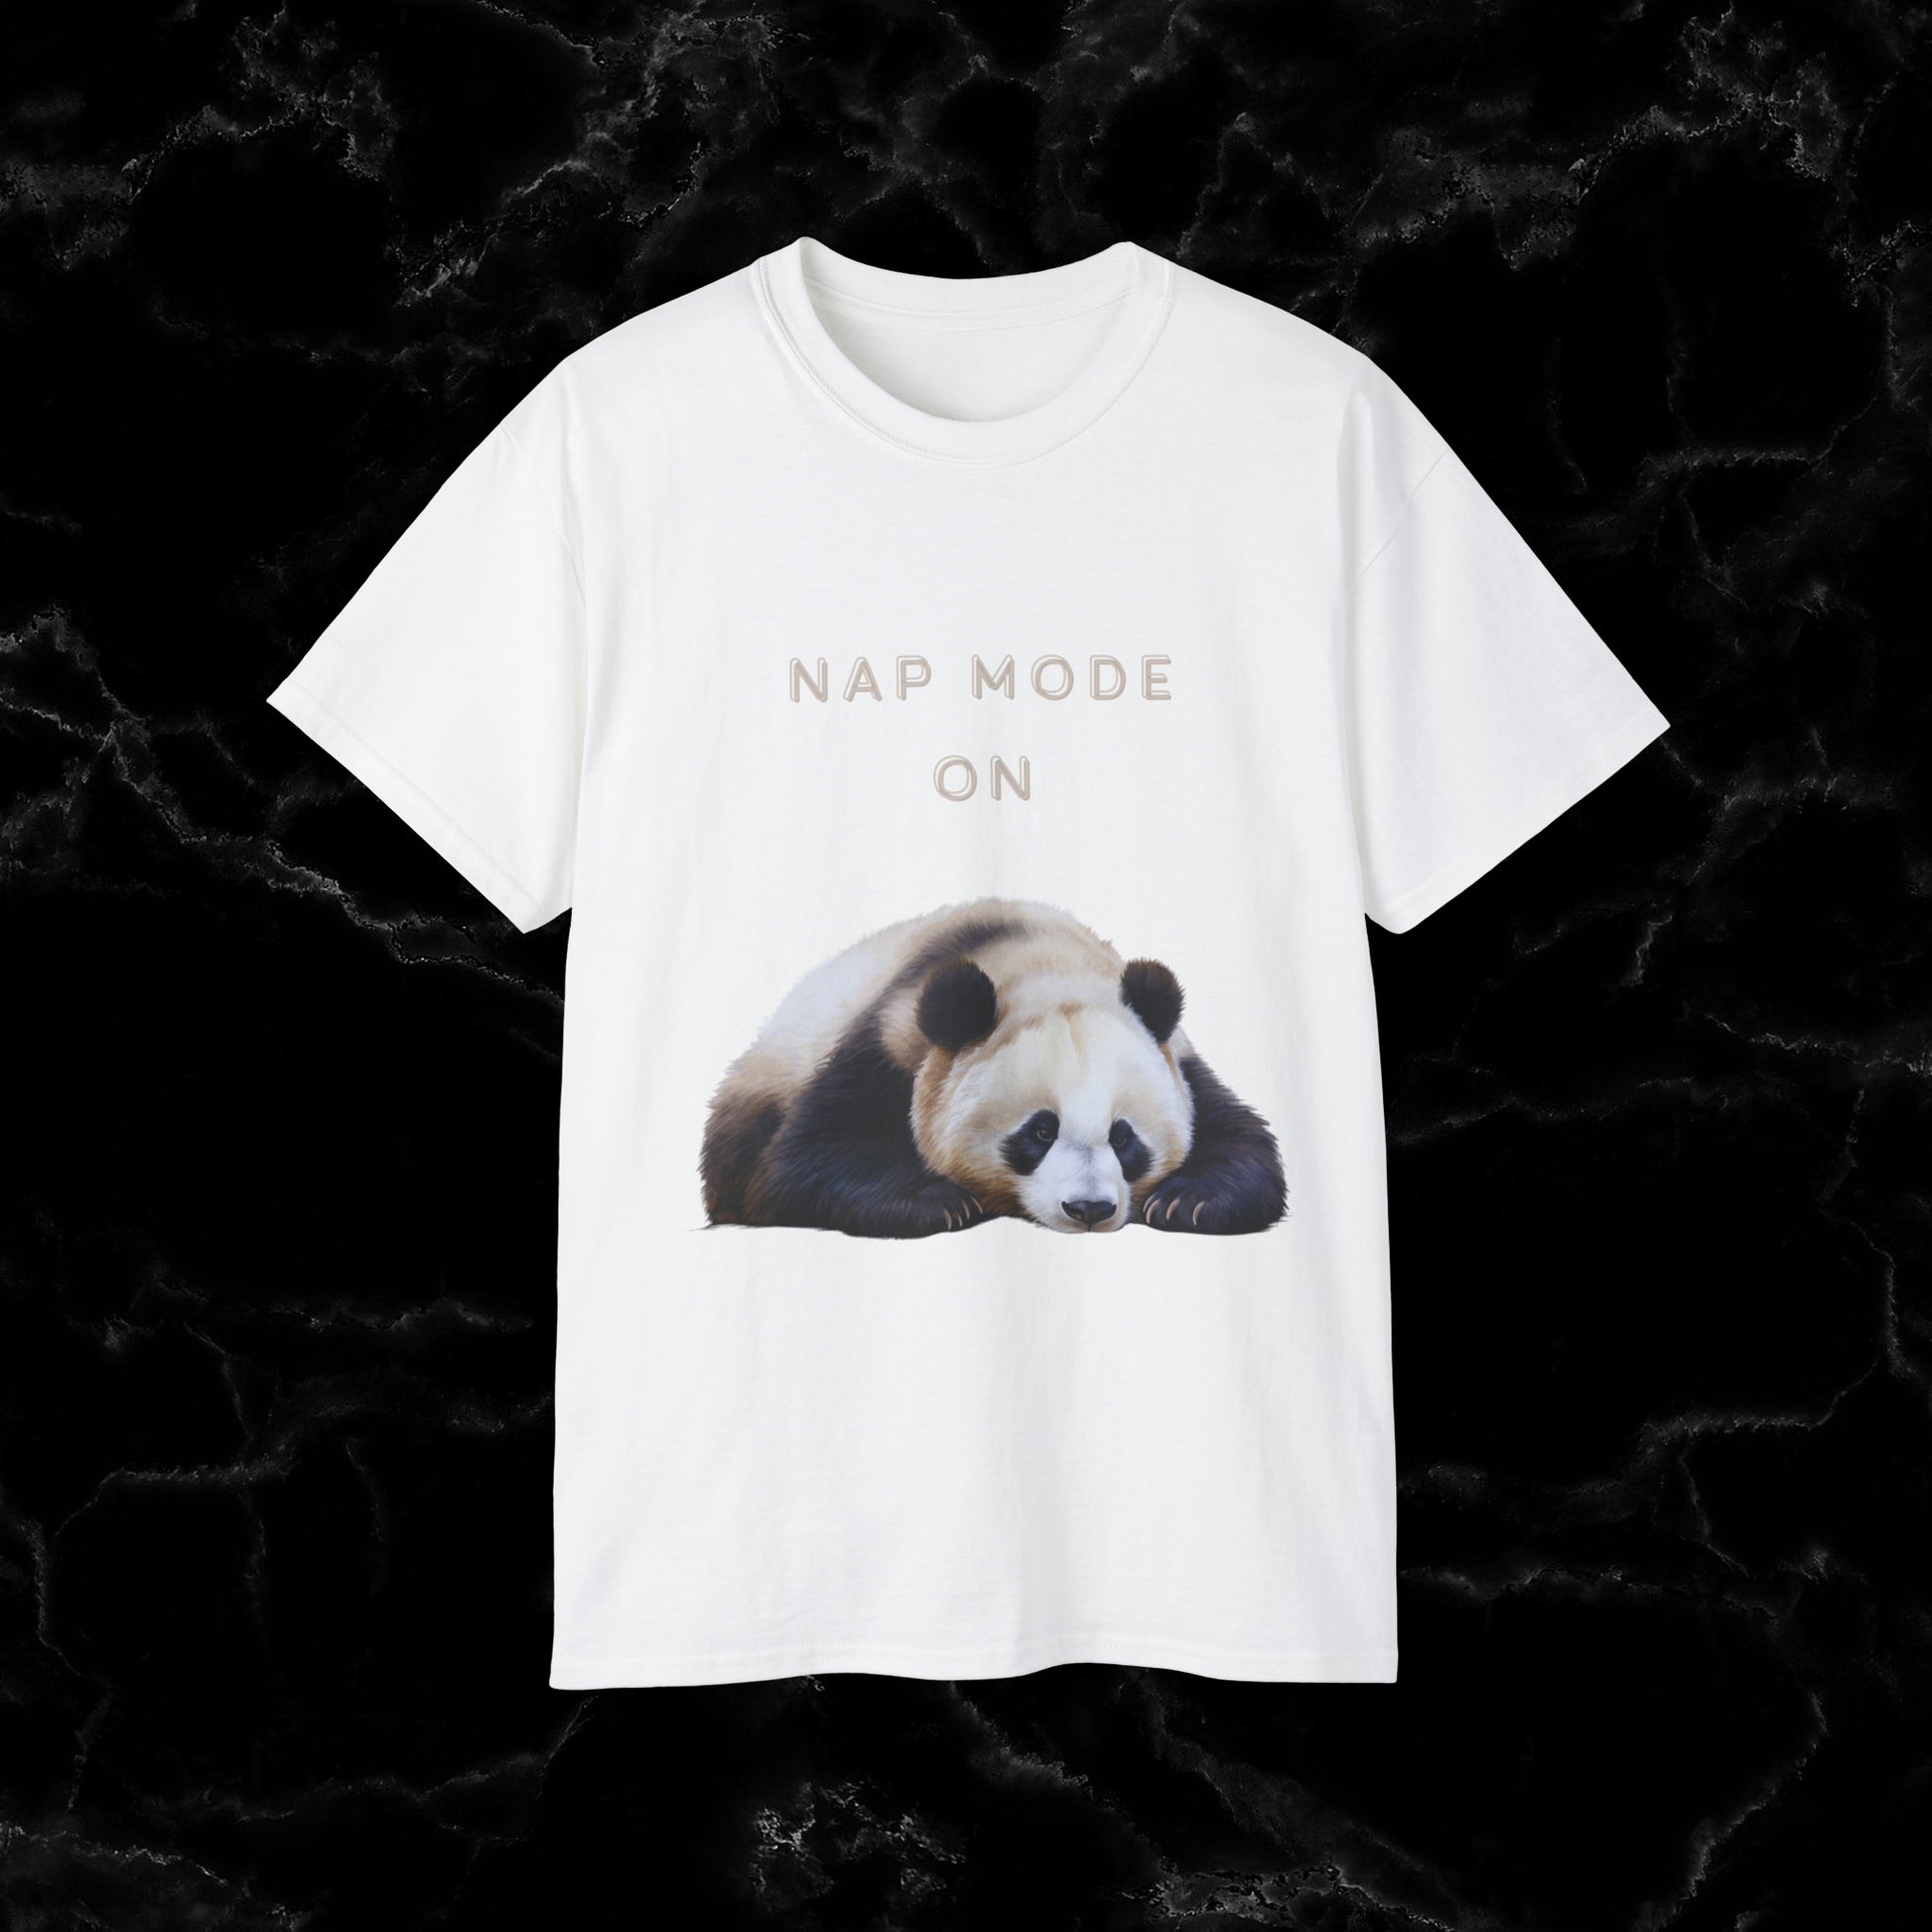 Nap Time Panda Unisex Funny Tee - Hilarious Panda Nap Design T-Shirt White S 